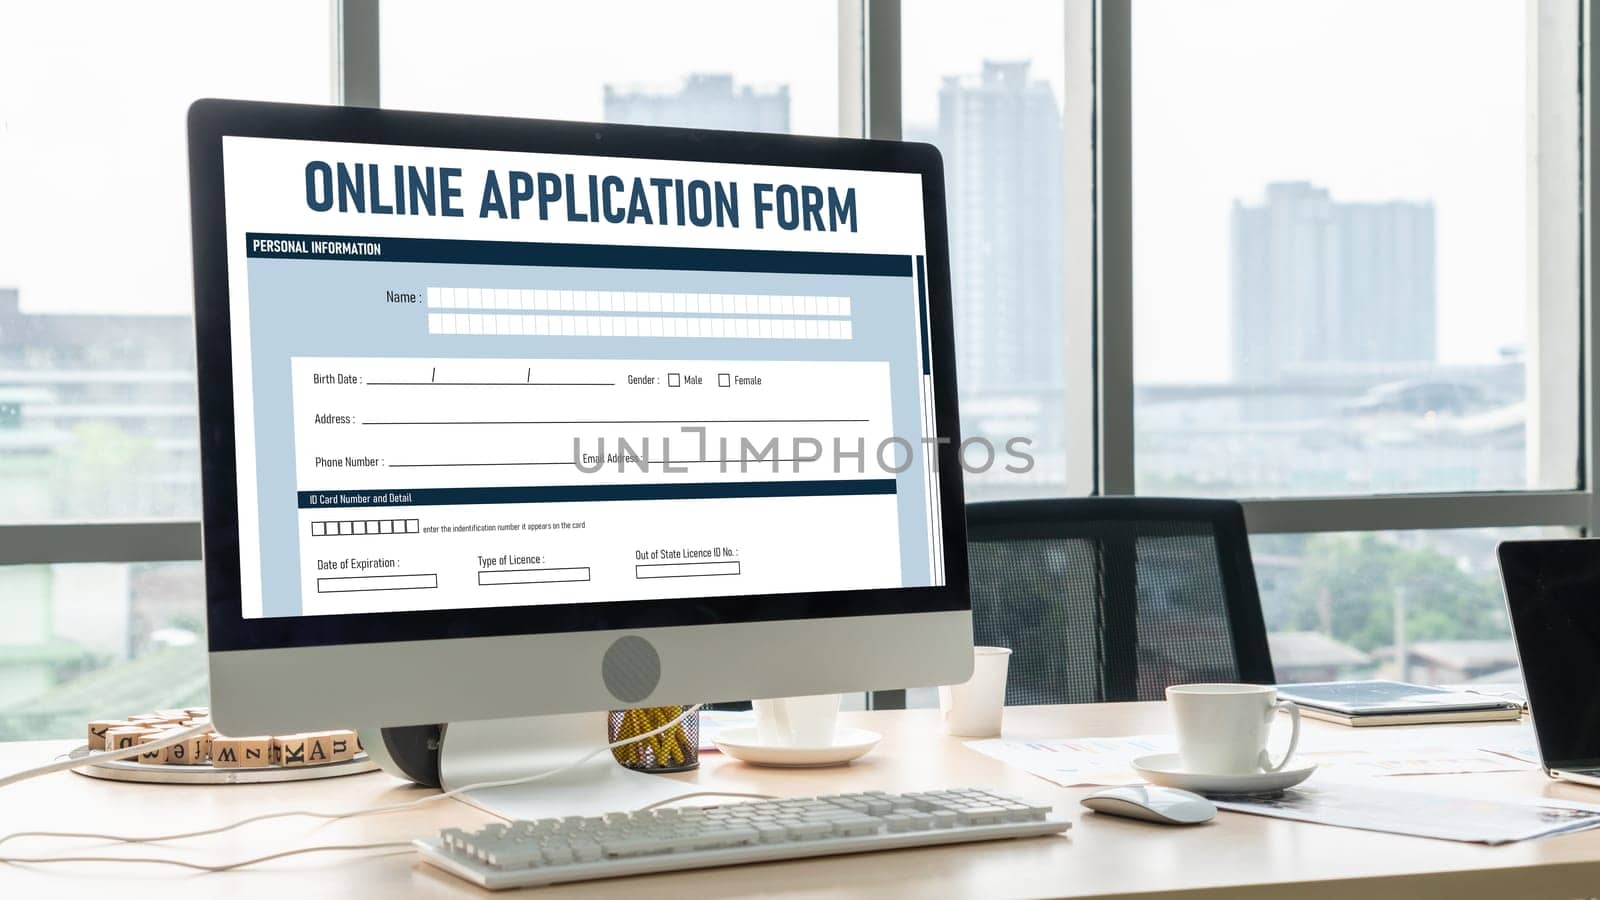 Online application form for modish registration by biancoblue